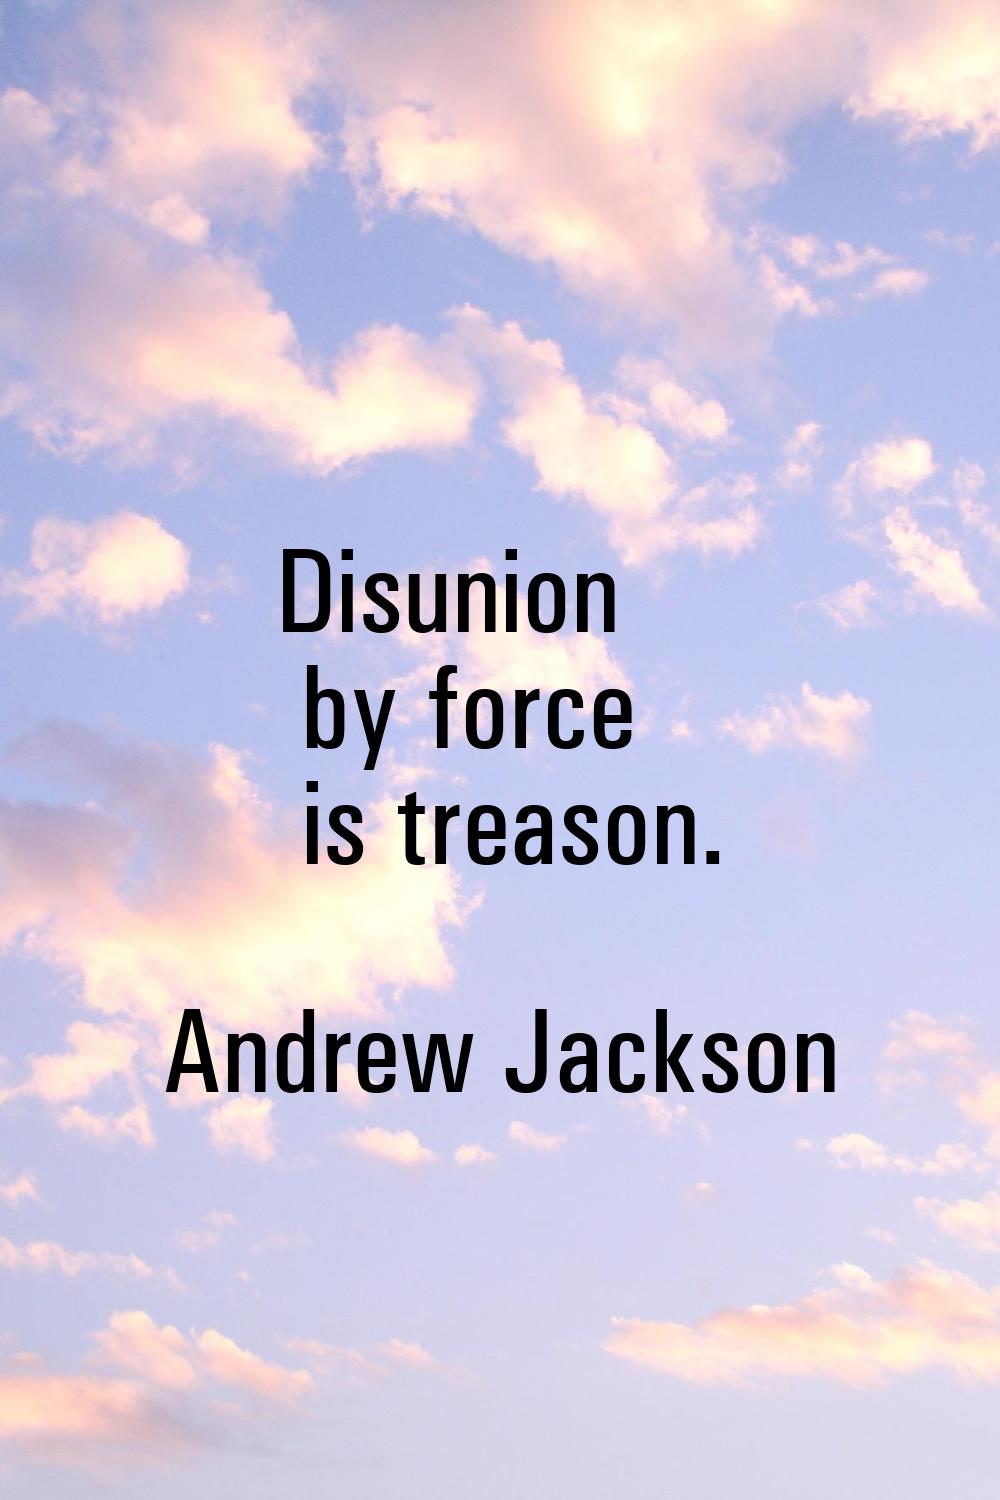 Disunion by force is treason.